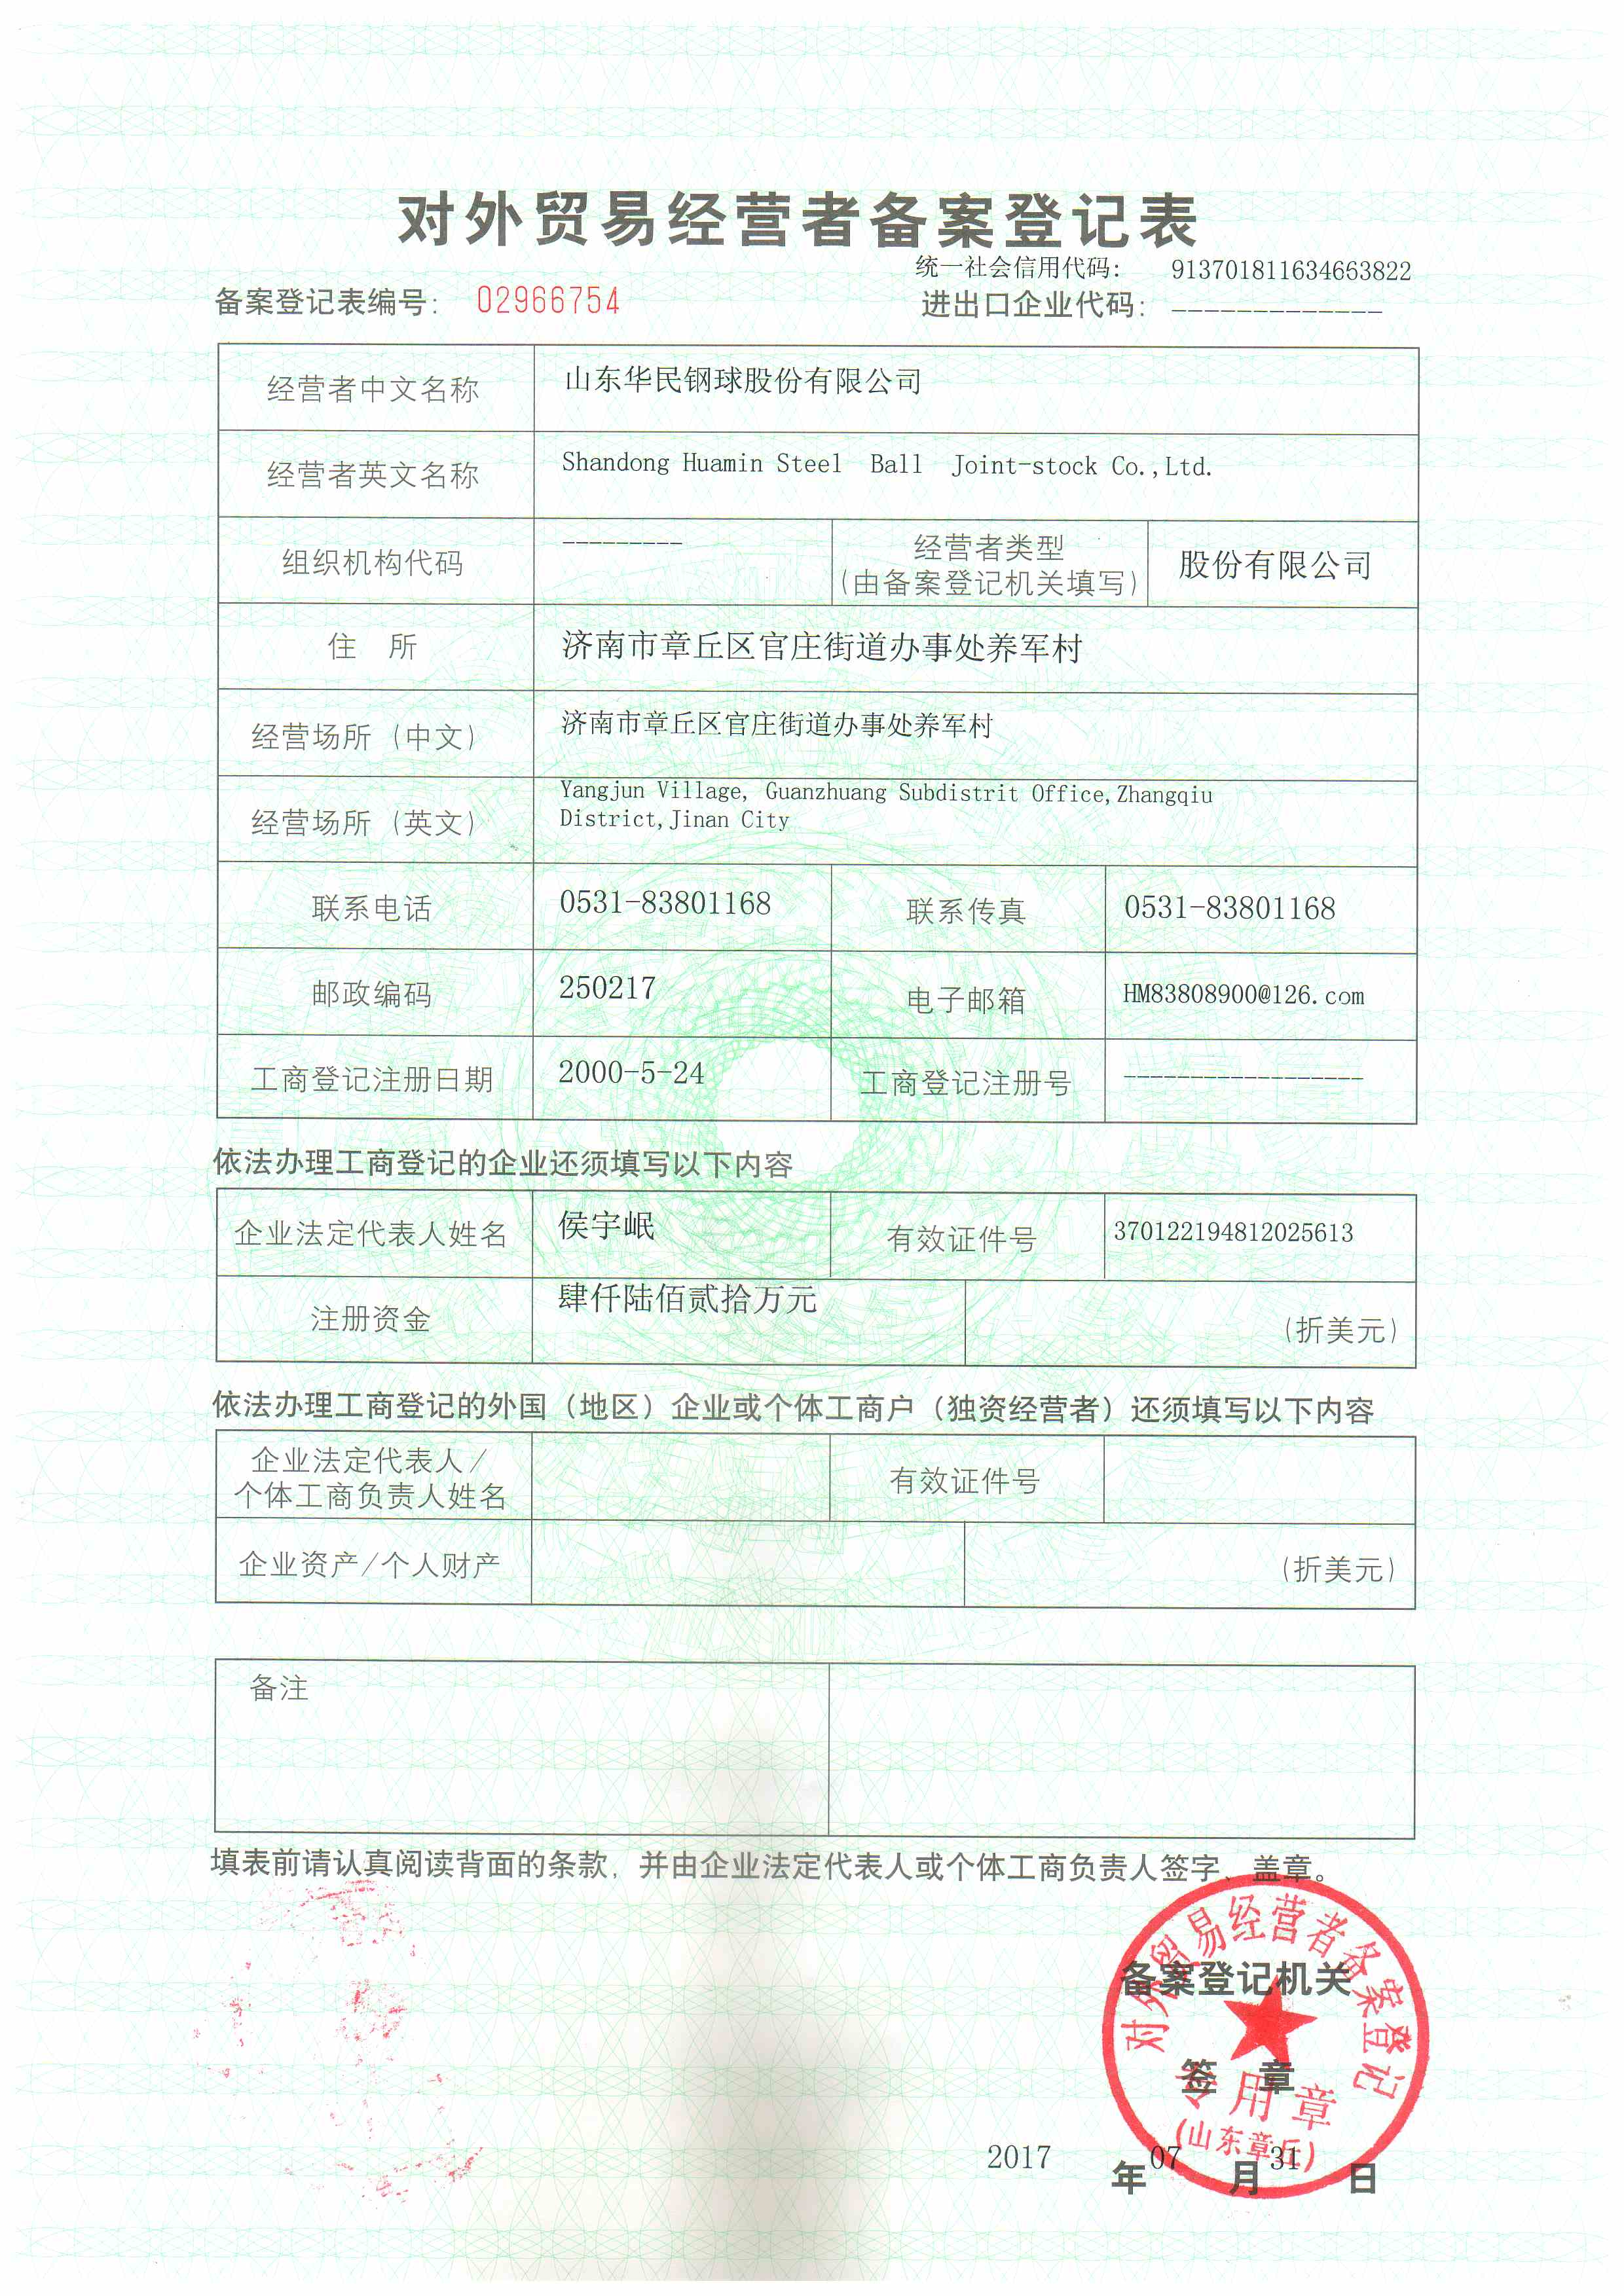 Foreign trade operator registration form 1